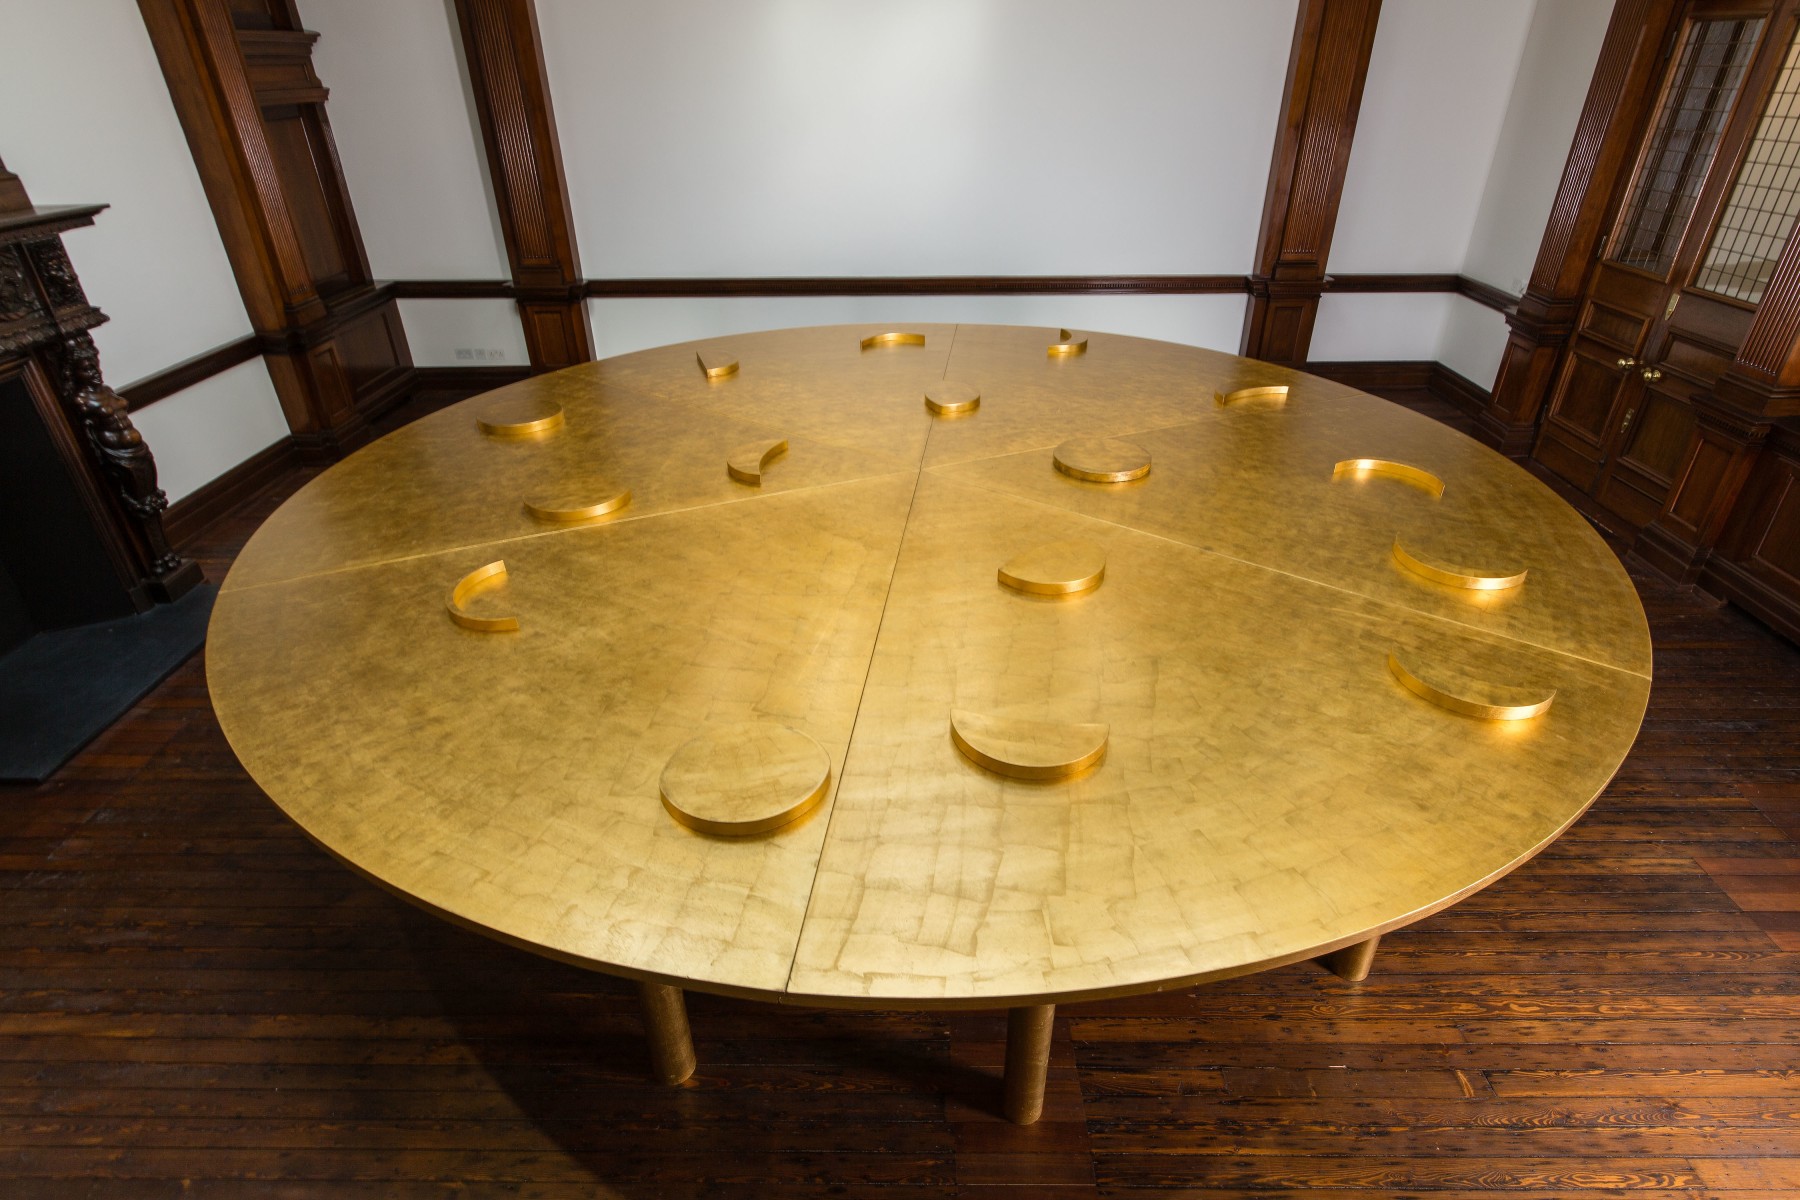 JAMES LEE BYARS, The Diamond Floor, London, 2015, Installation Image 17